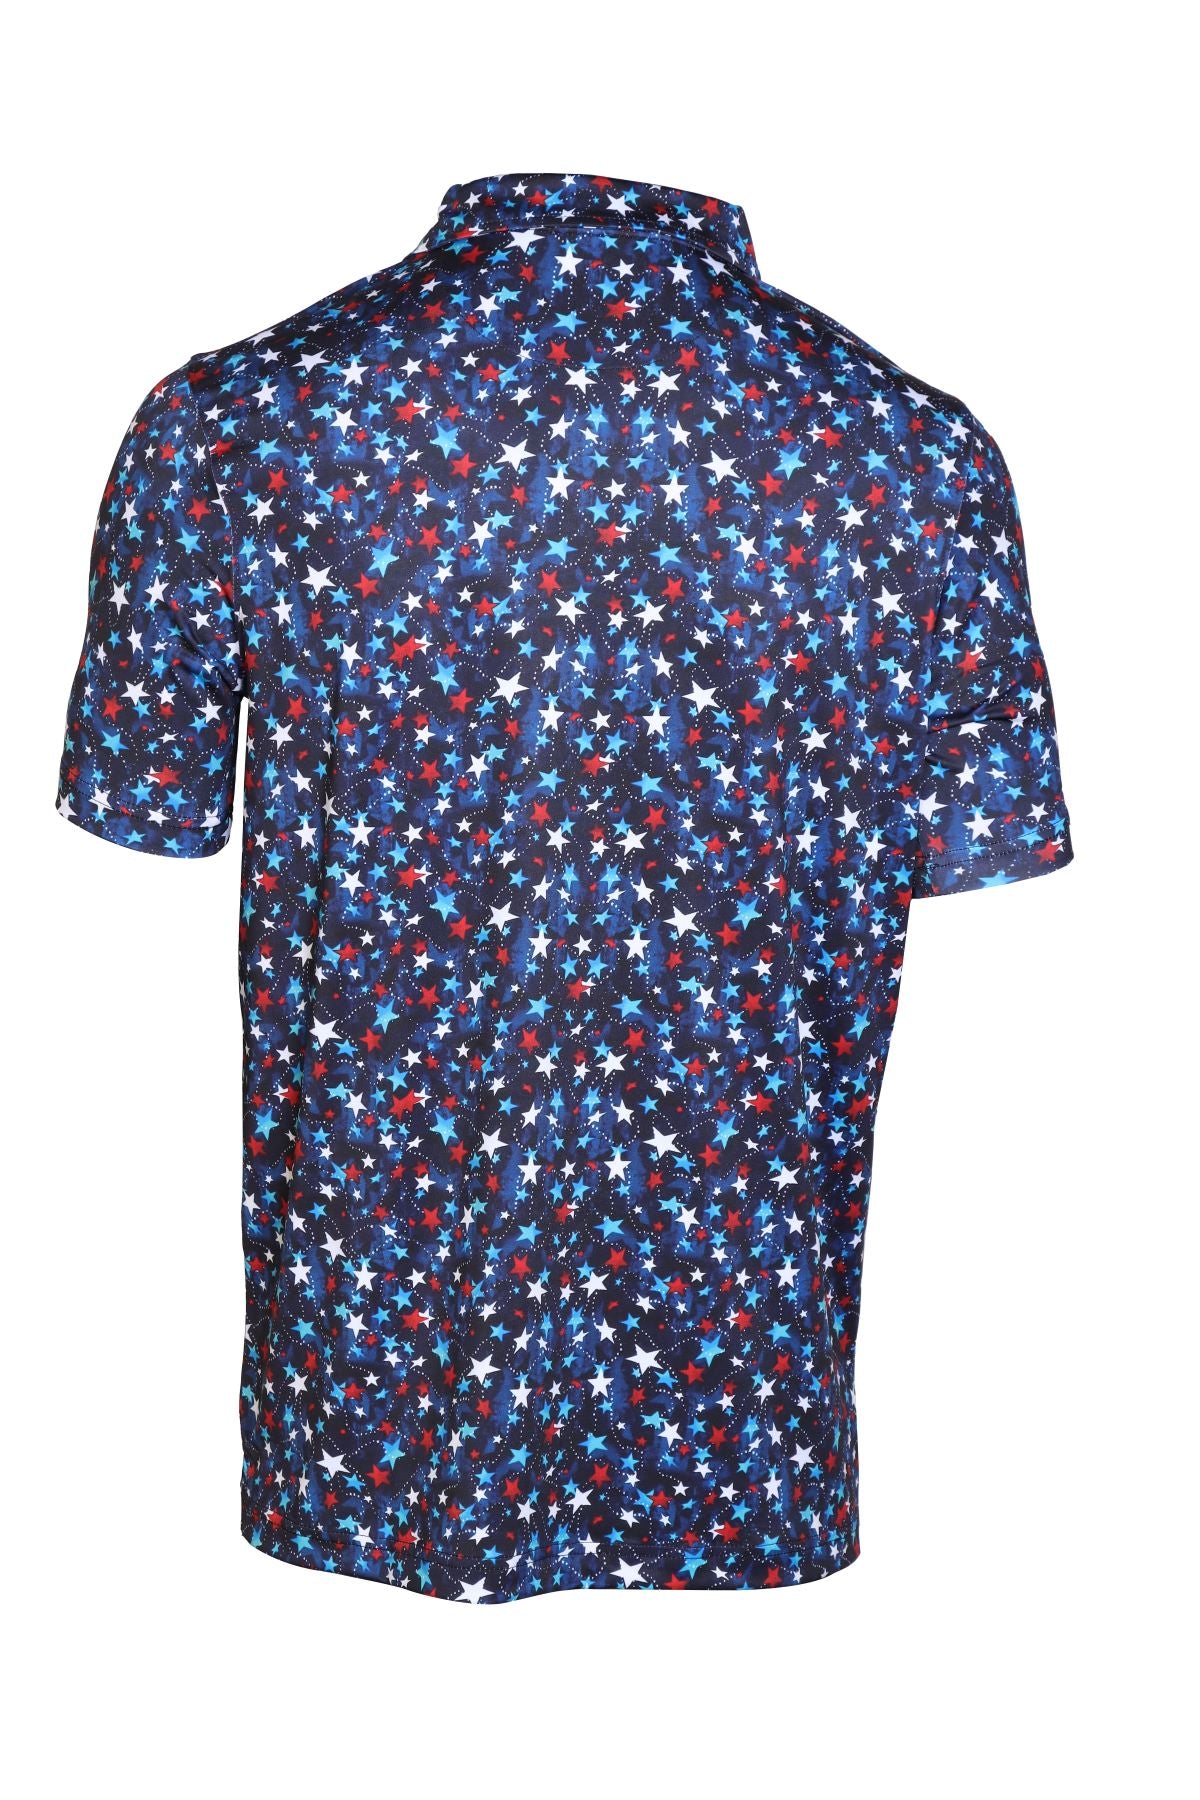 Sligo Men's Star Printed Polo T-shirt  (Indian Size)